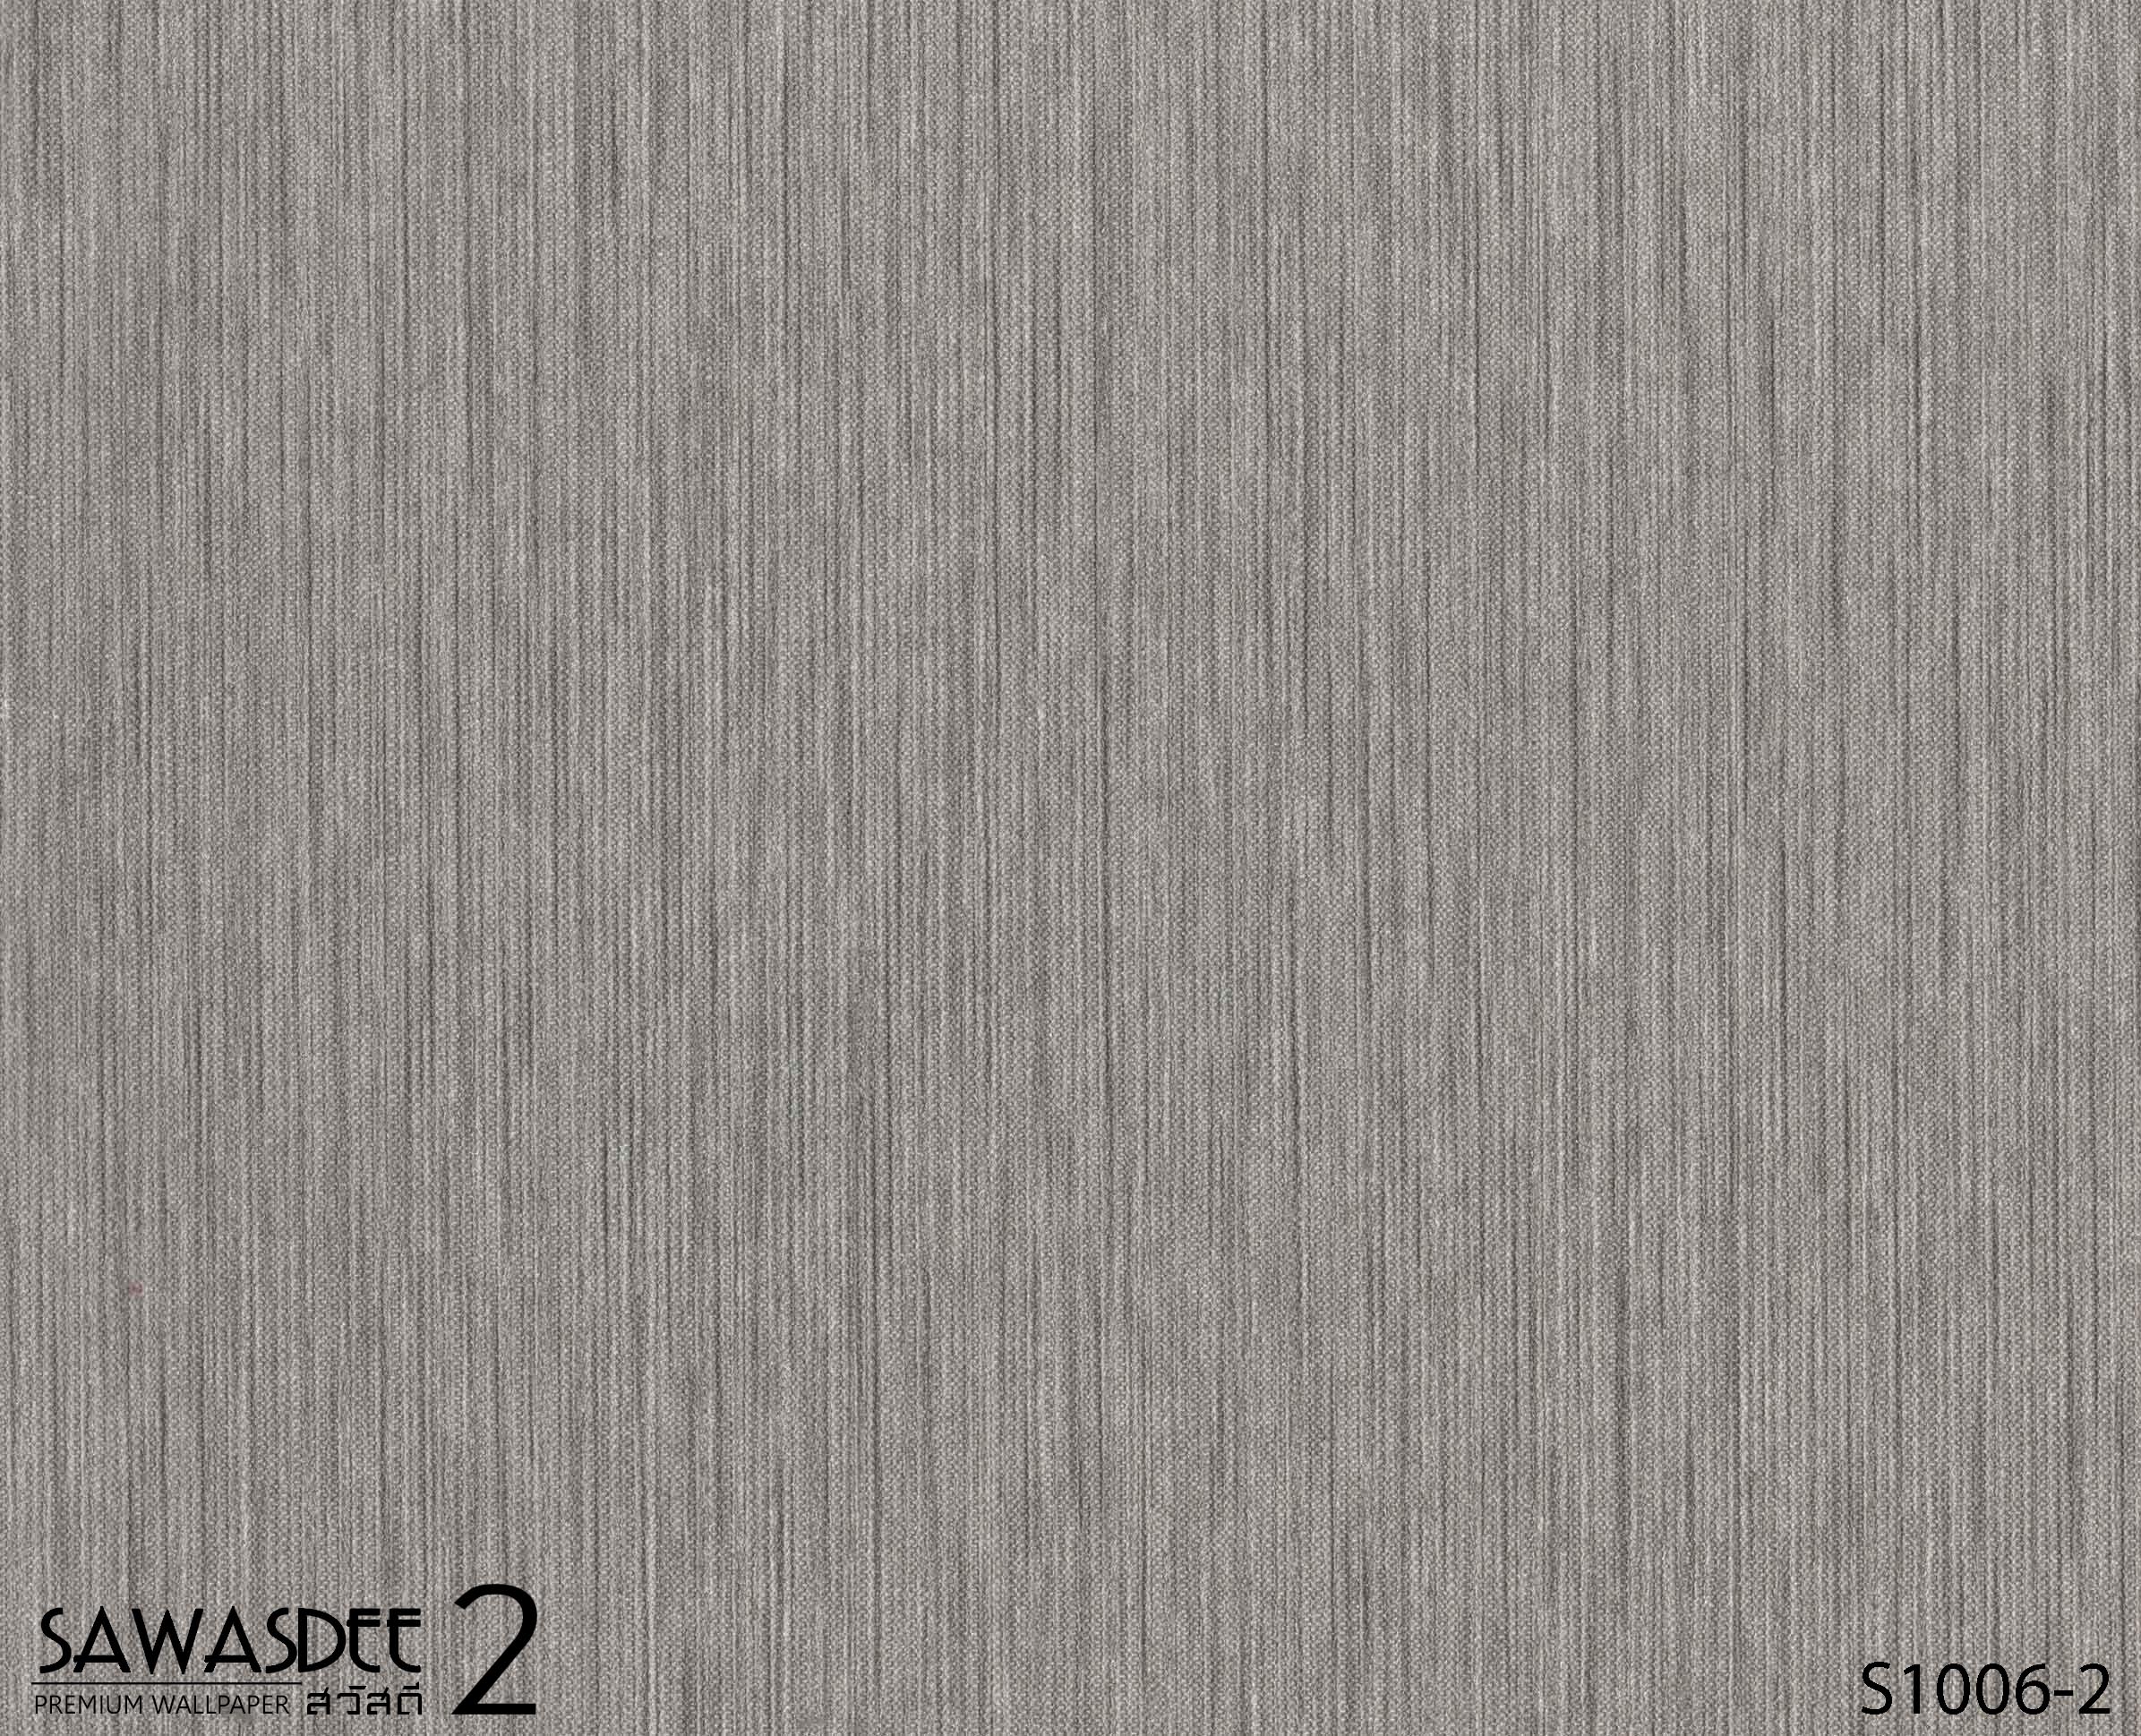 Wallpaper (SAWASDEE 2) S1006-2